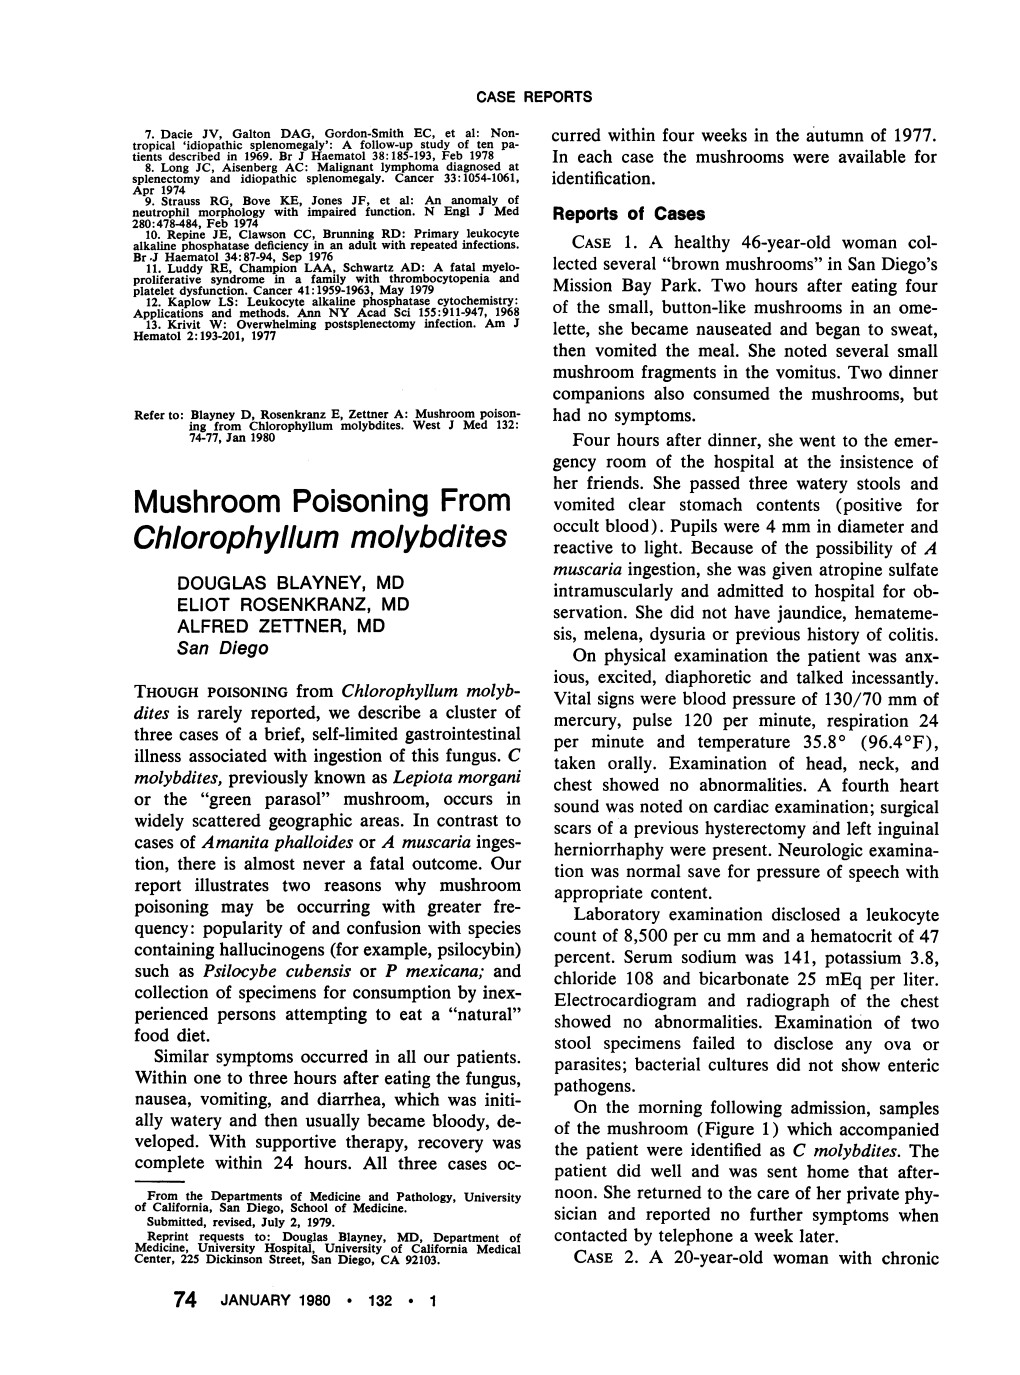 Mushroom Poisoning from Chlorophyllum Molybdites